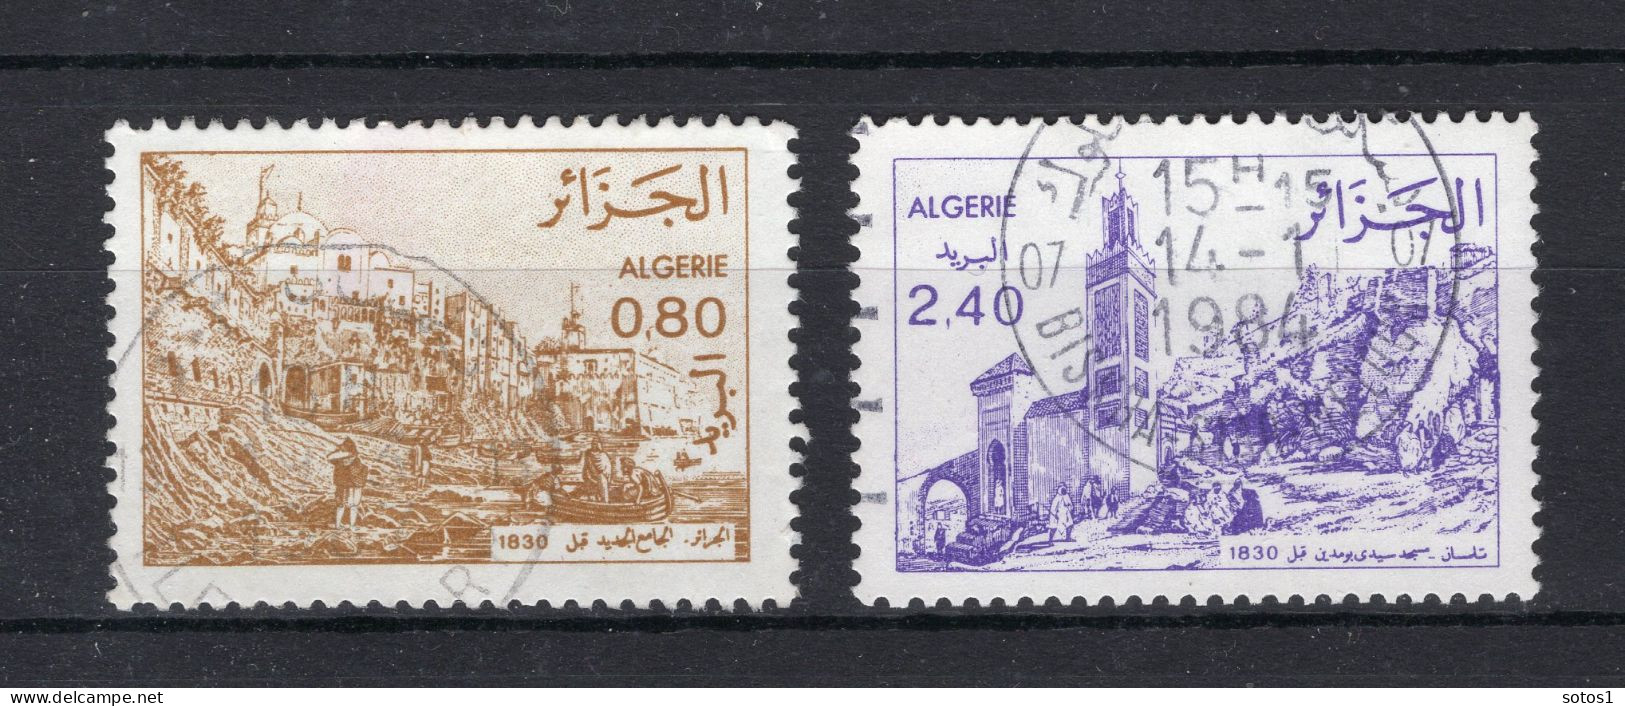 ALGERIJE Yt. 759/760° Gestempeld 1982 - Algerien (1962-...)